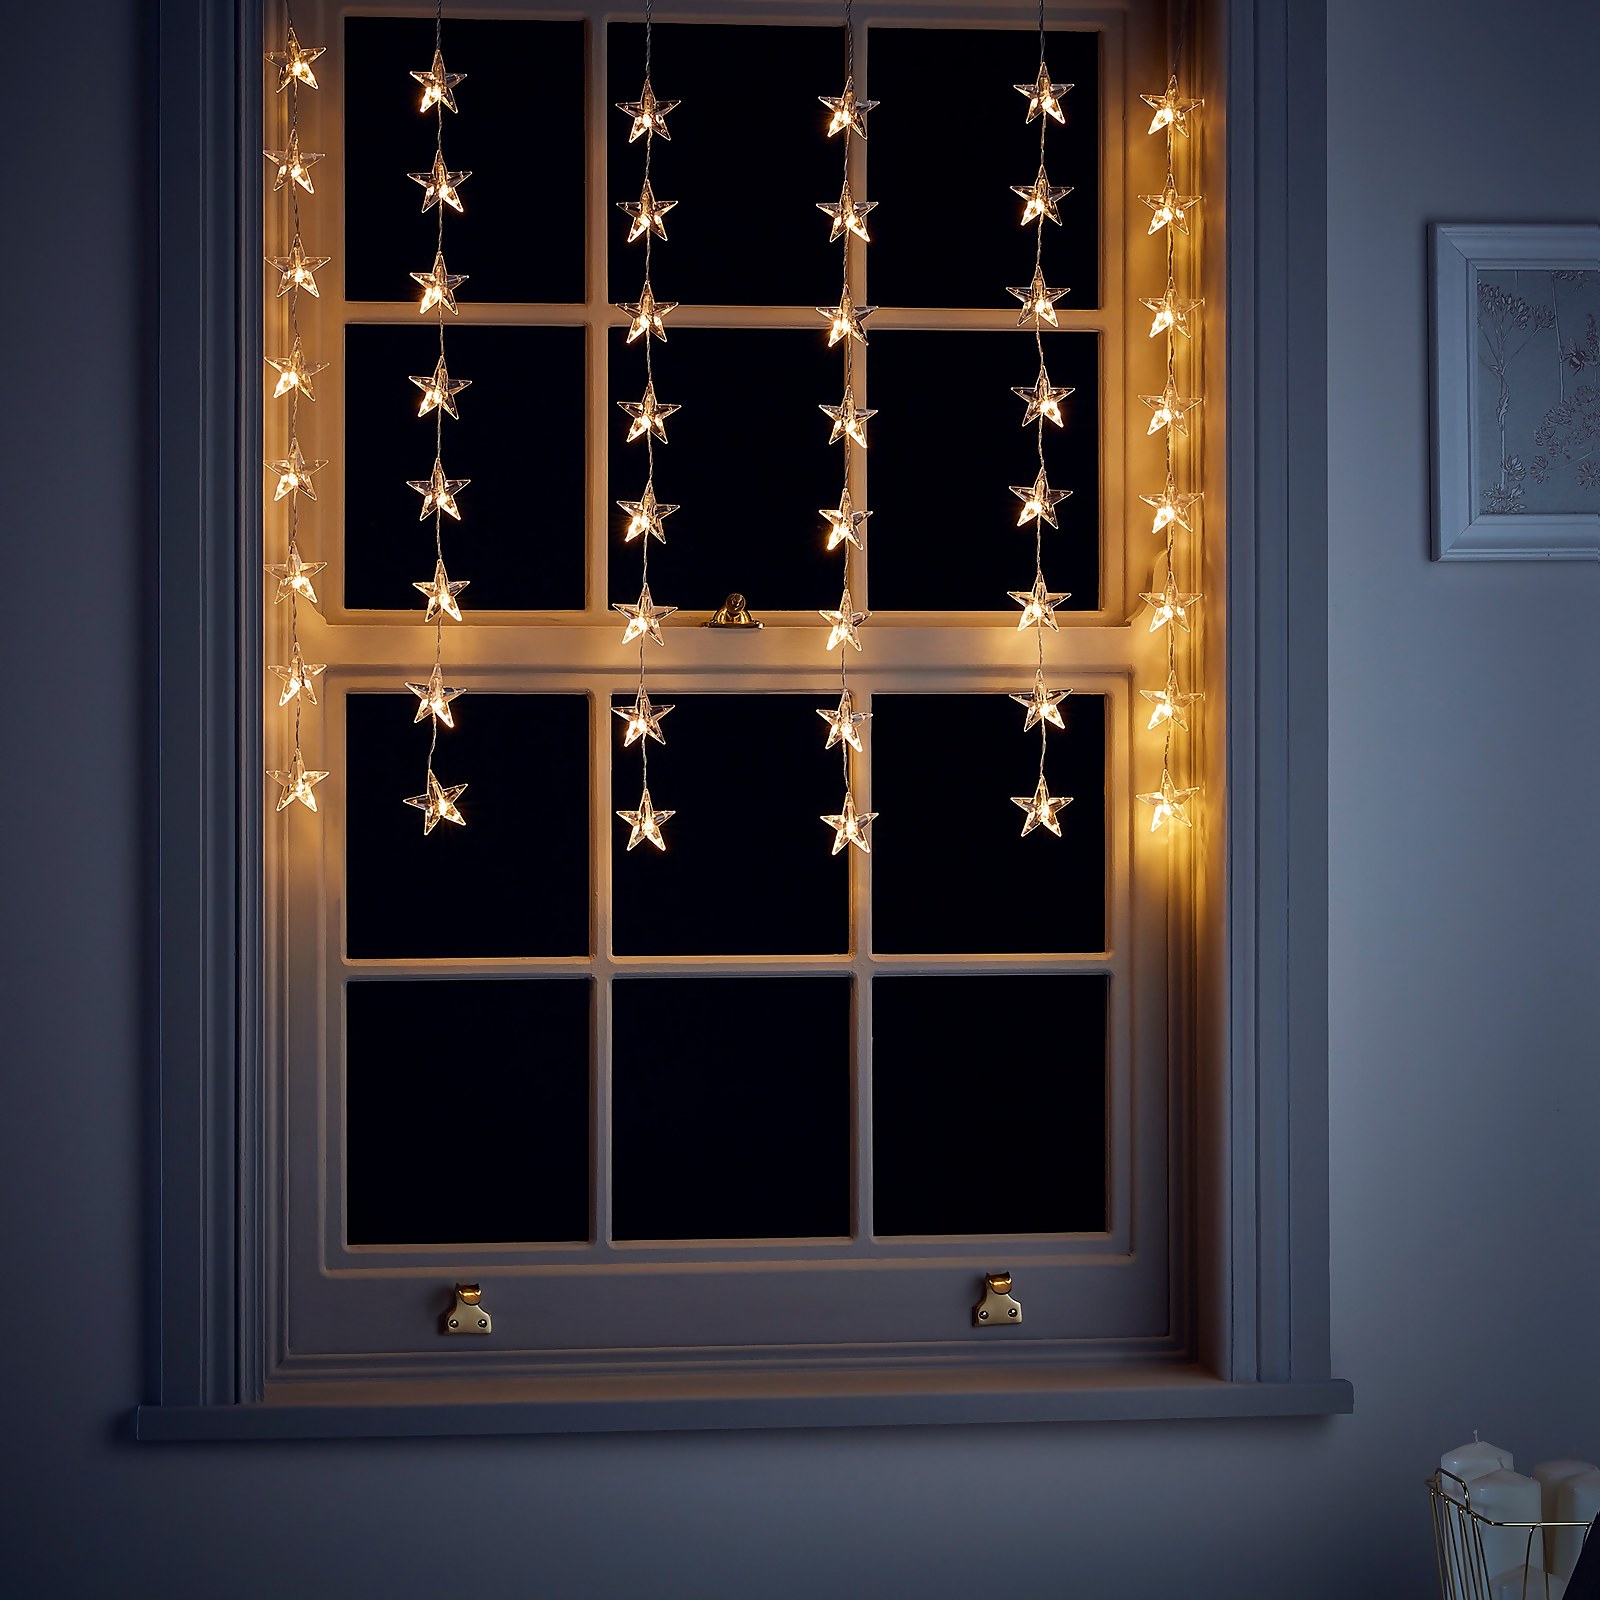 Photo of 48 Acrylic Star Led Christmas Window Curtain Lights - Warm White